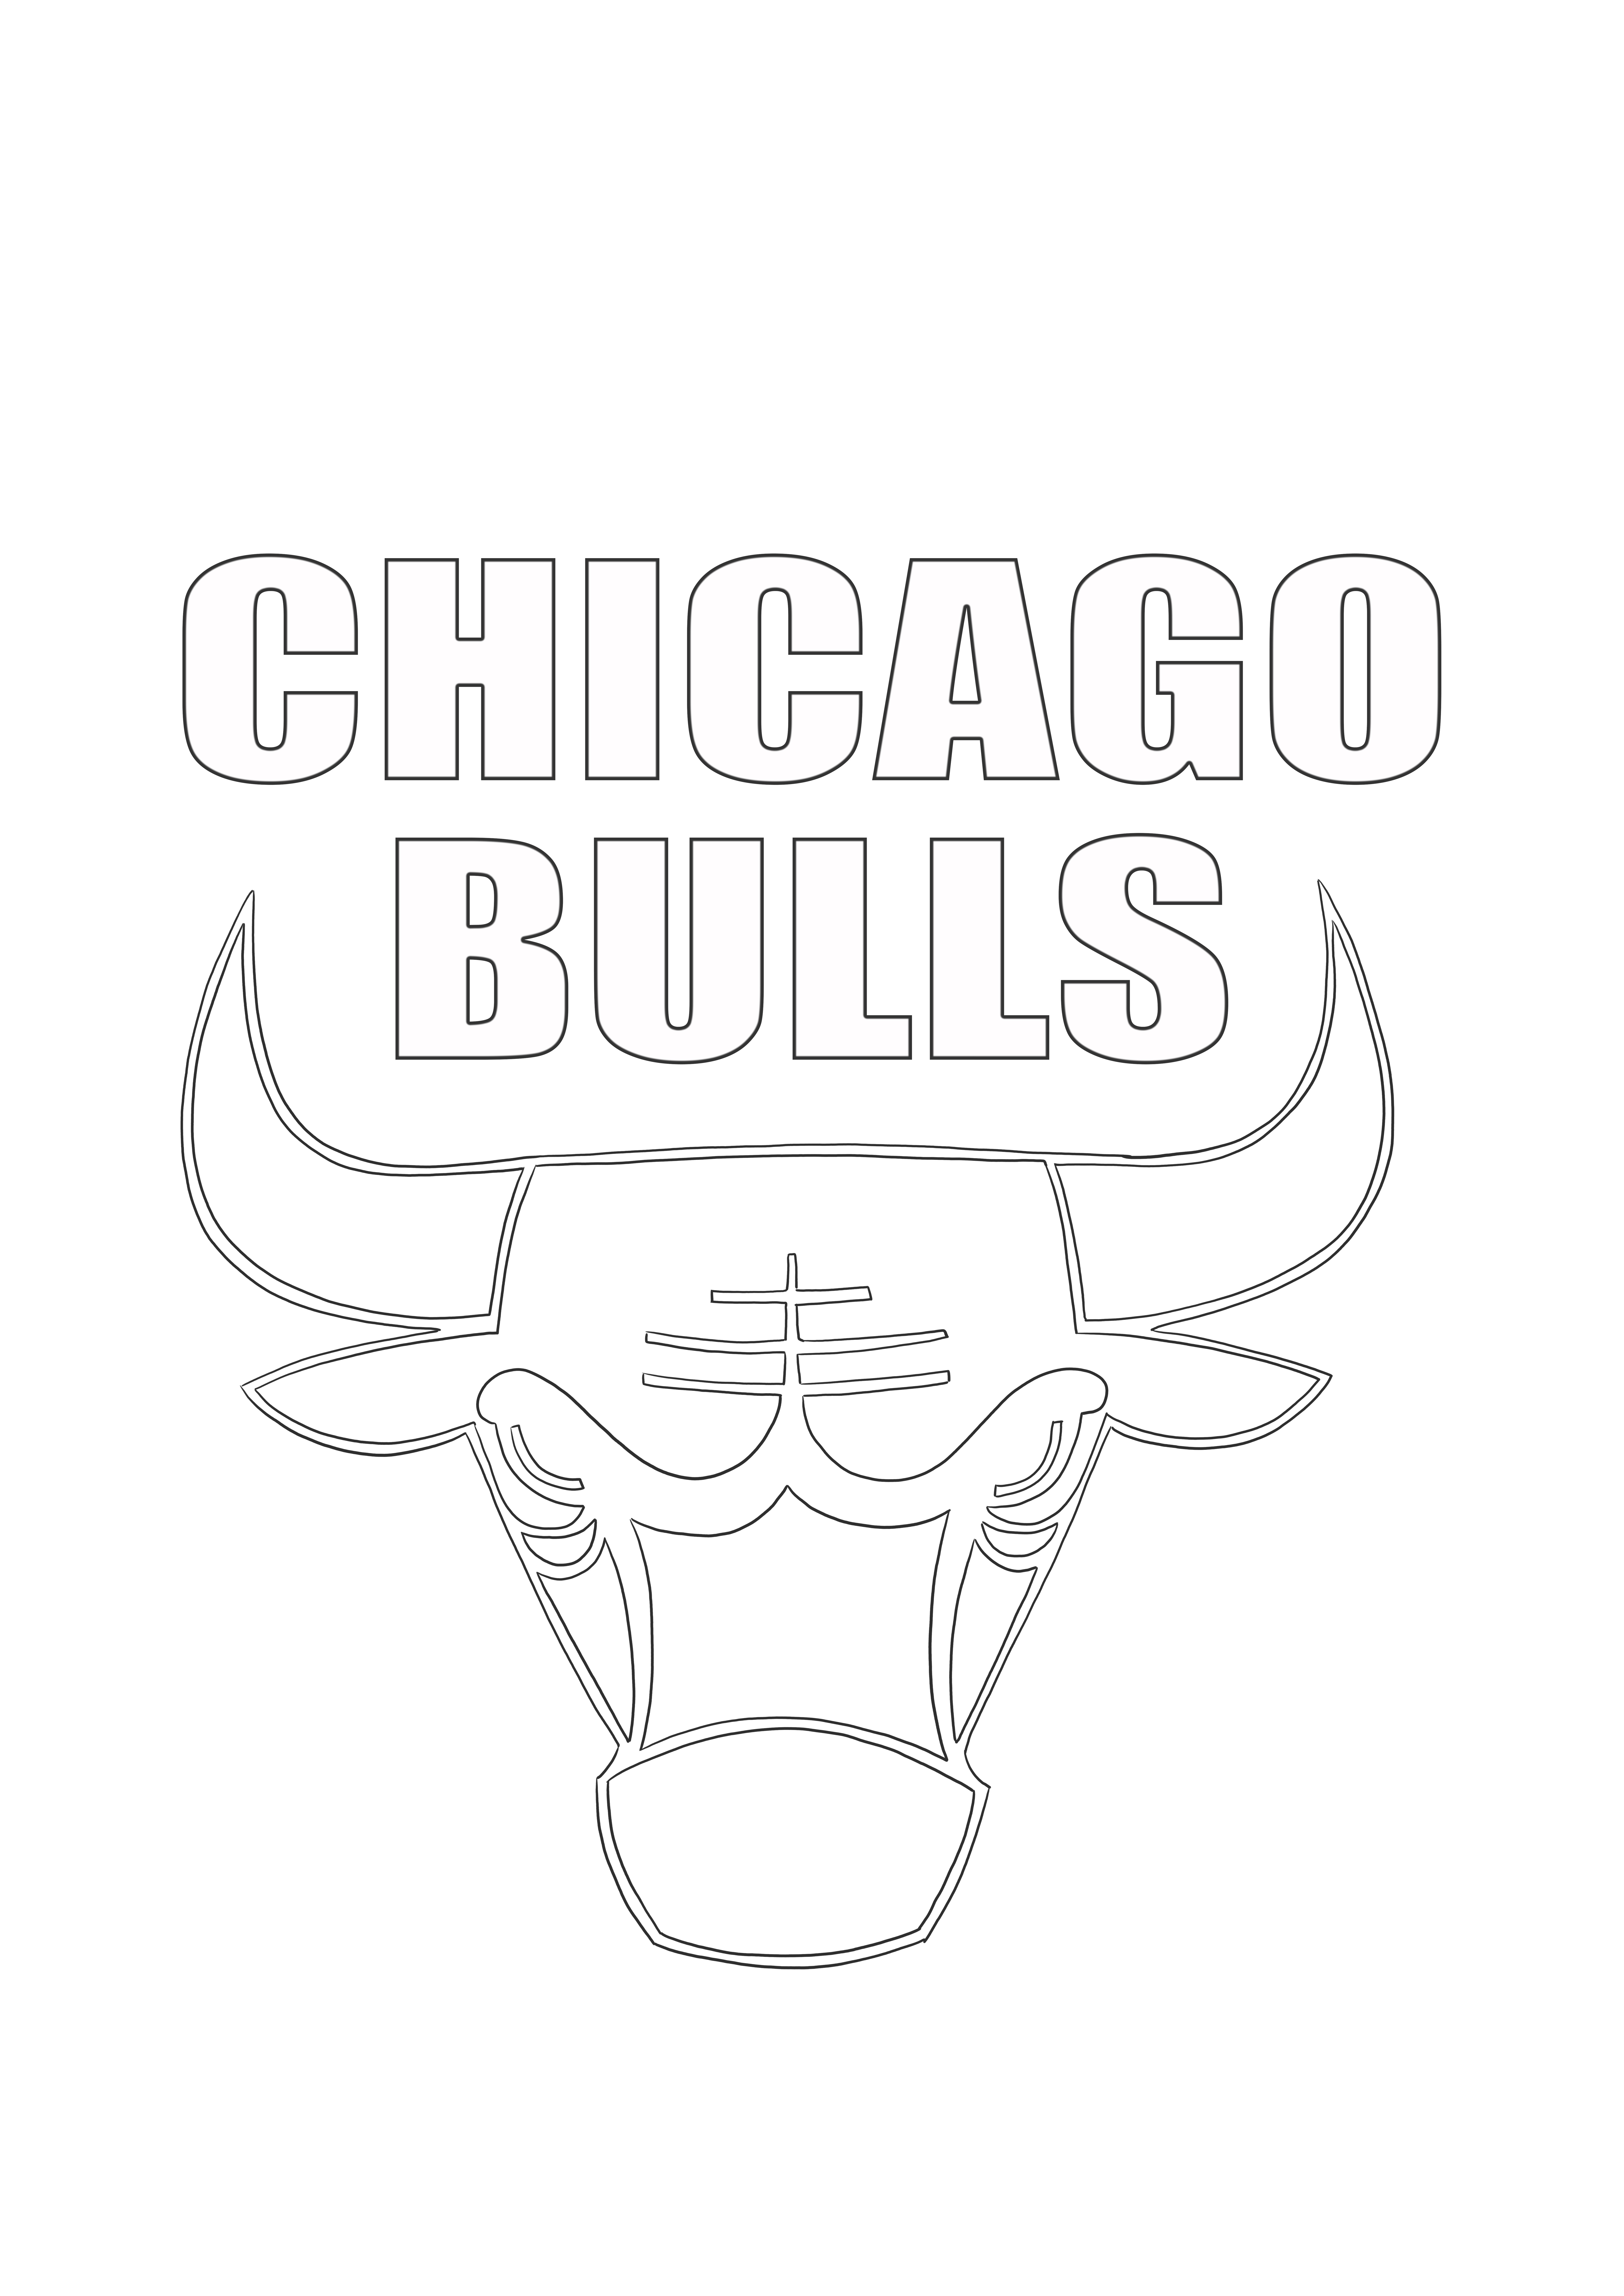 Logo de los Chicago Bulls para colorear e imprimir gratis.